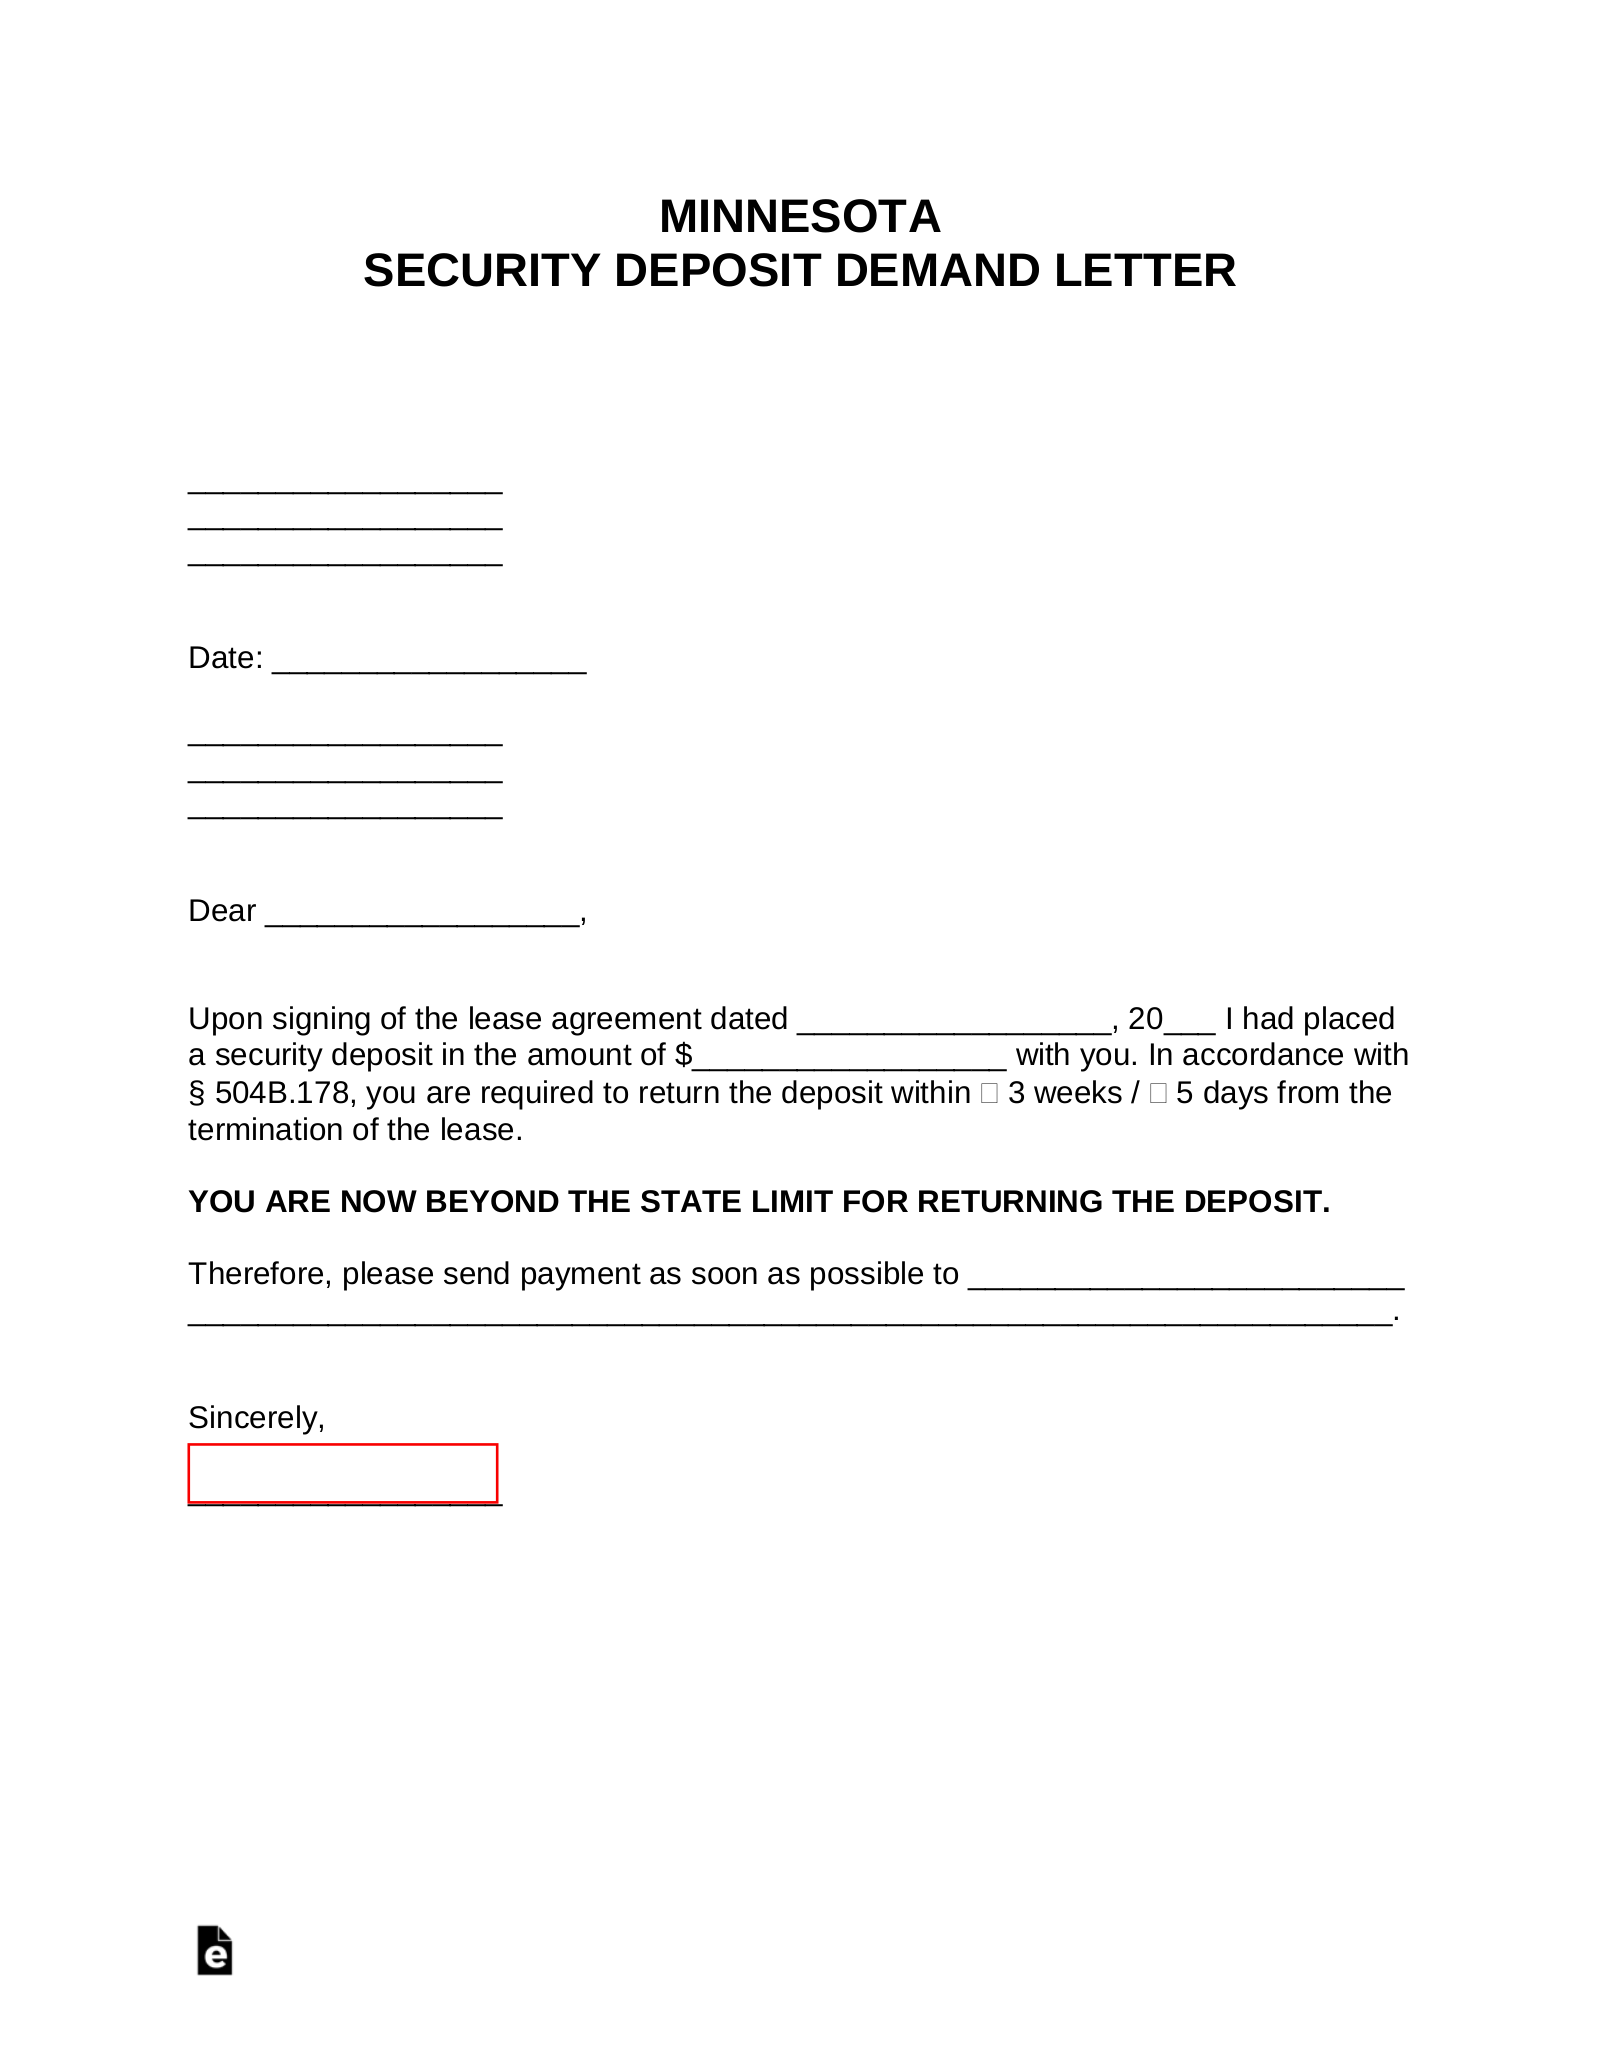 Minnesota Security Deposit Demand Letter